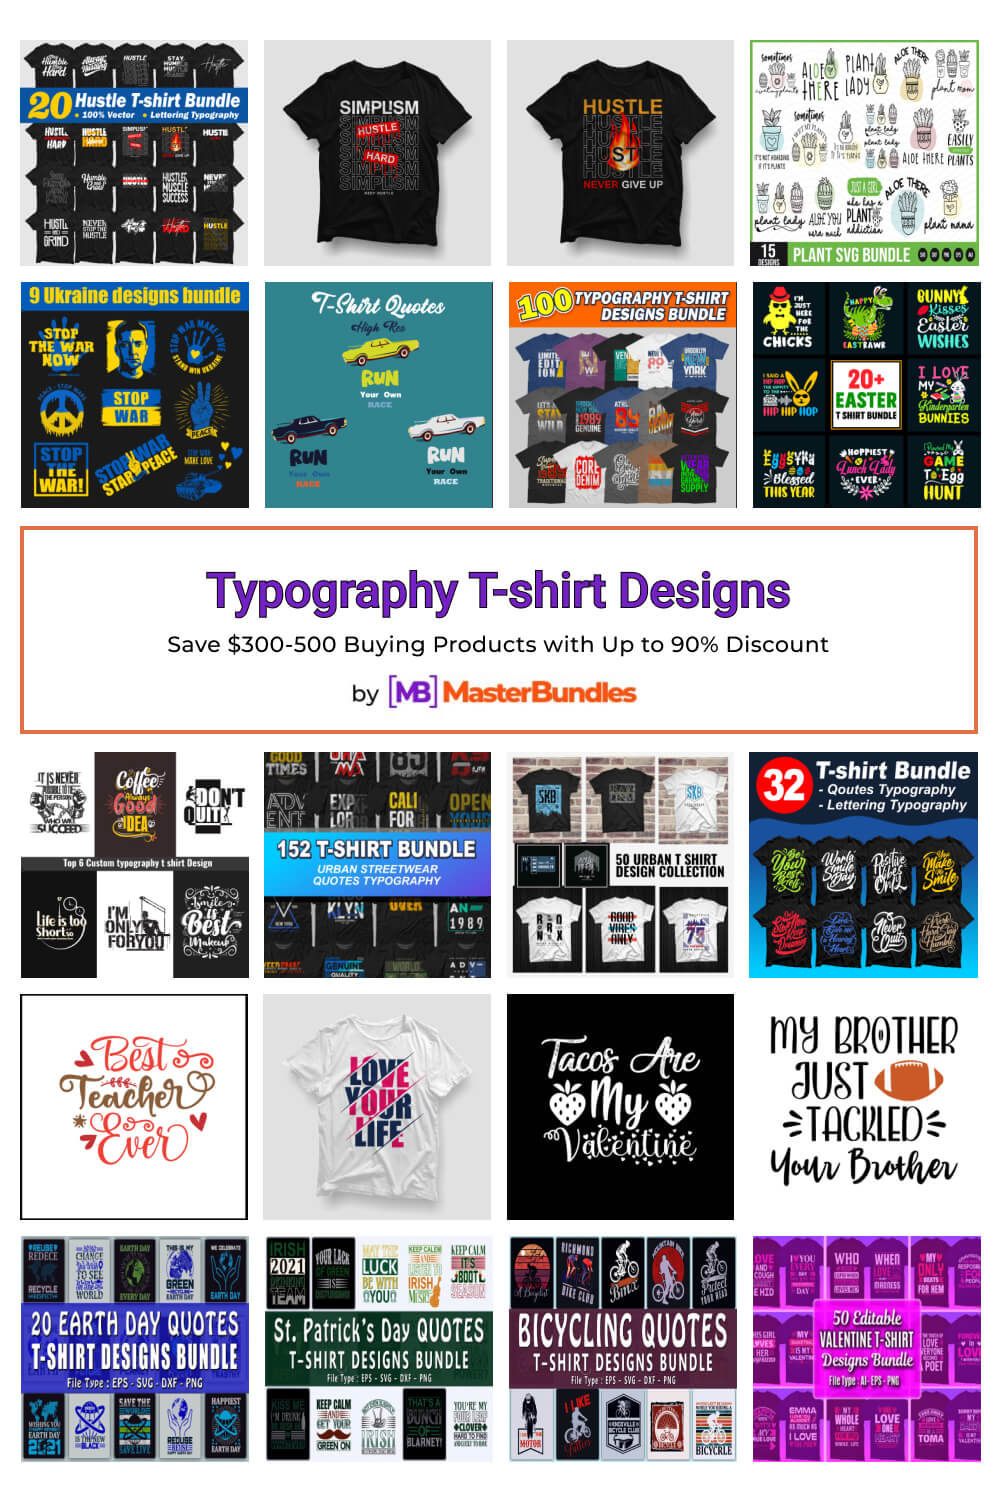 typography t shirt designs pinterest image.